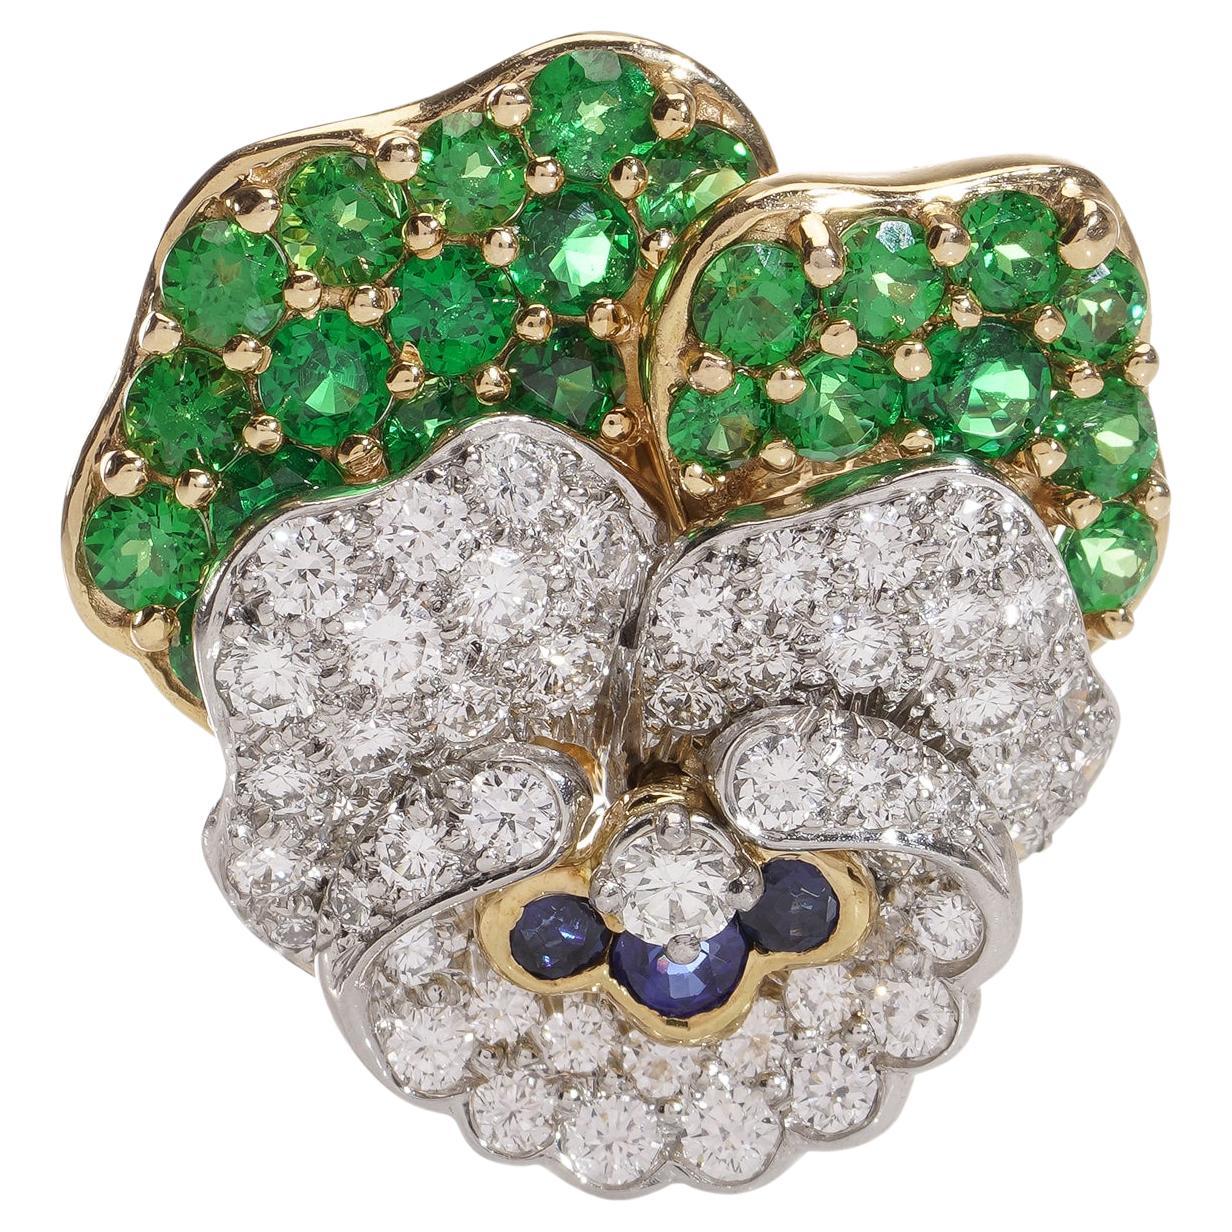 Tiffany & Co. Broche Pansy avec diamants, saphirs, grenats tsavorites